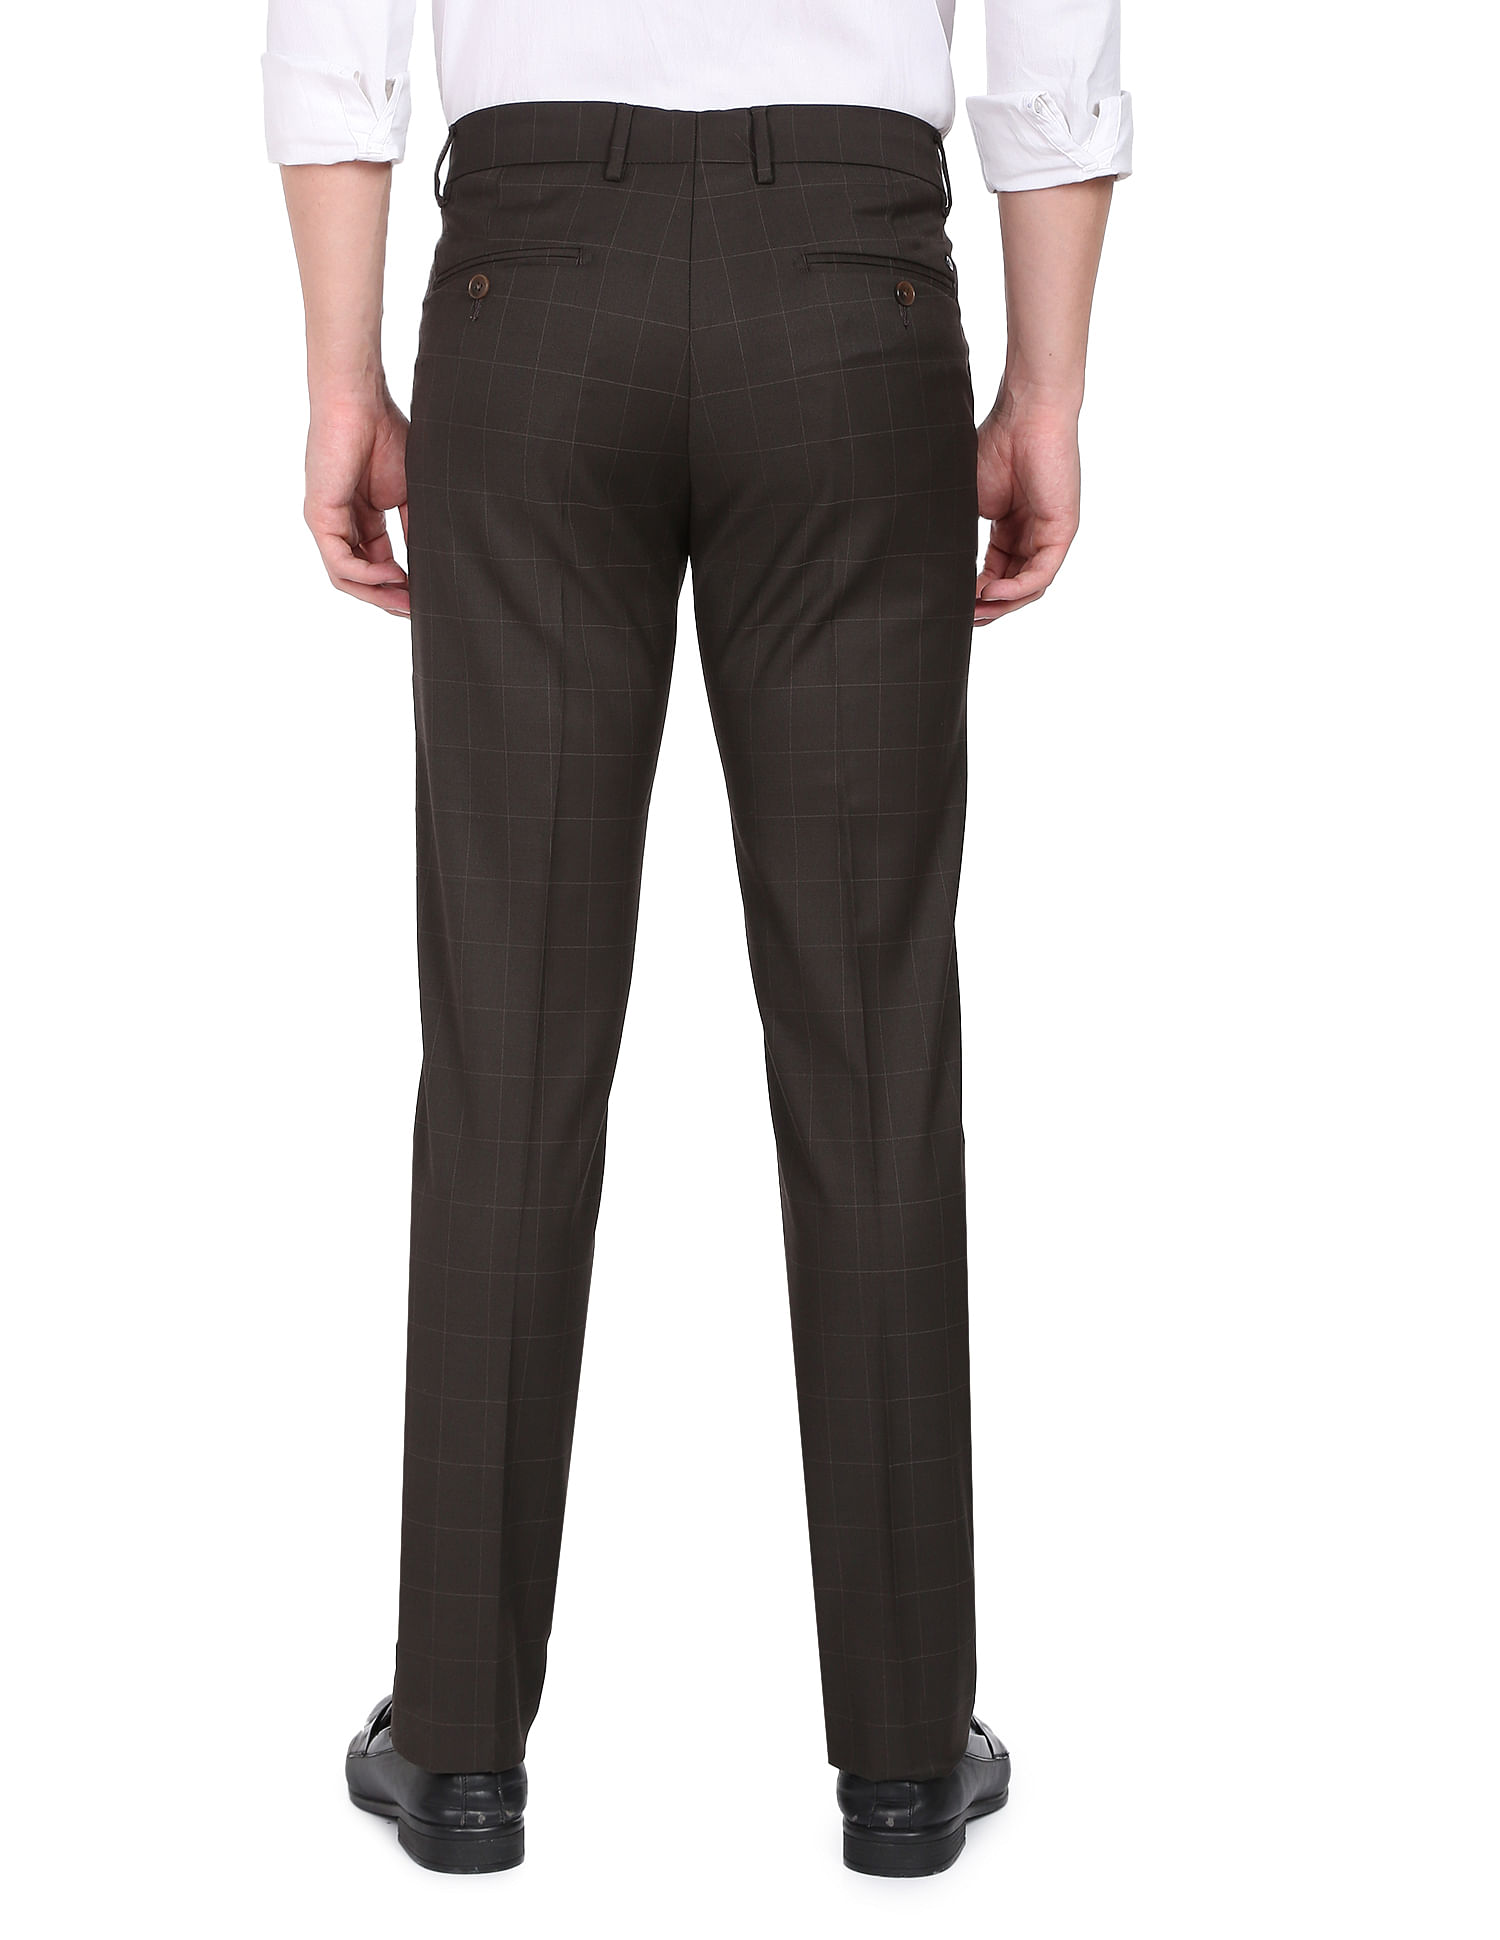 Buy Arrow Men's Skinny Pants (ASAFTR2496_Grey at Amazon.in